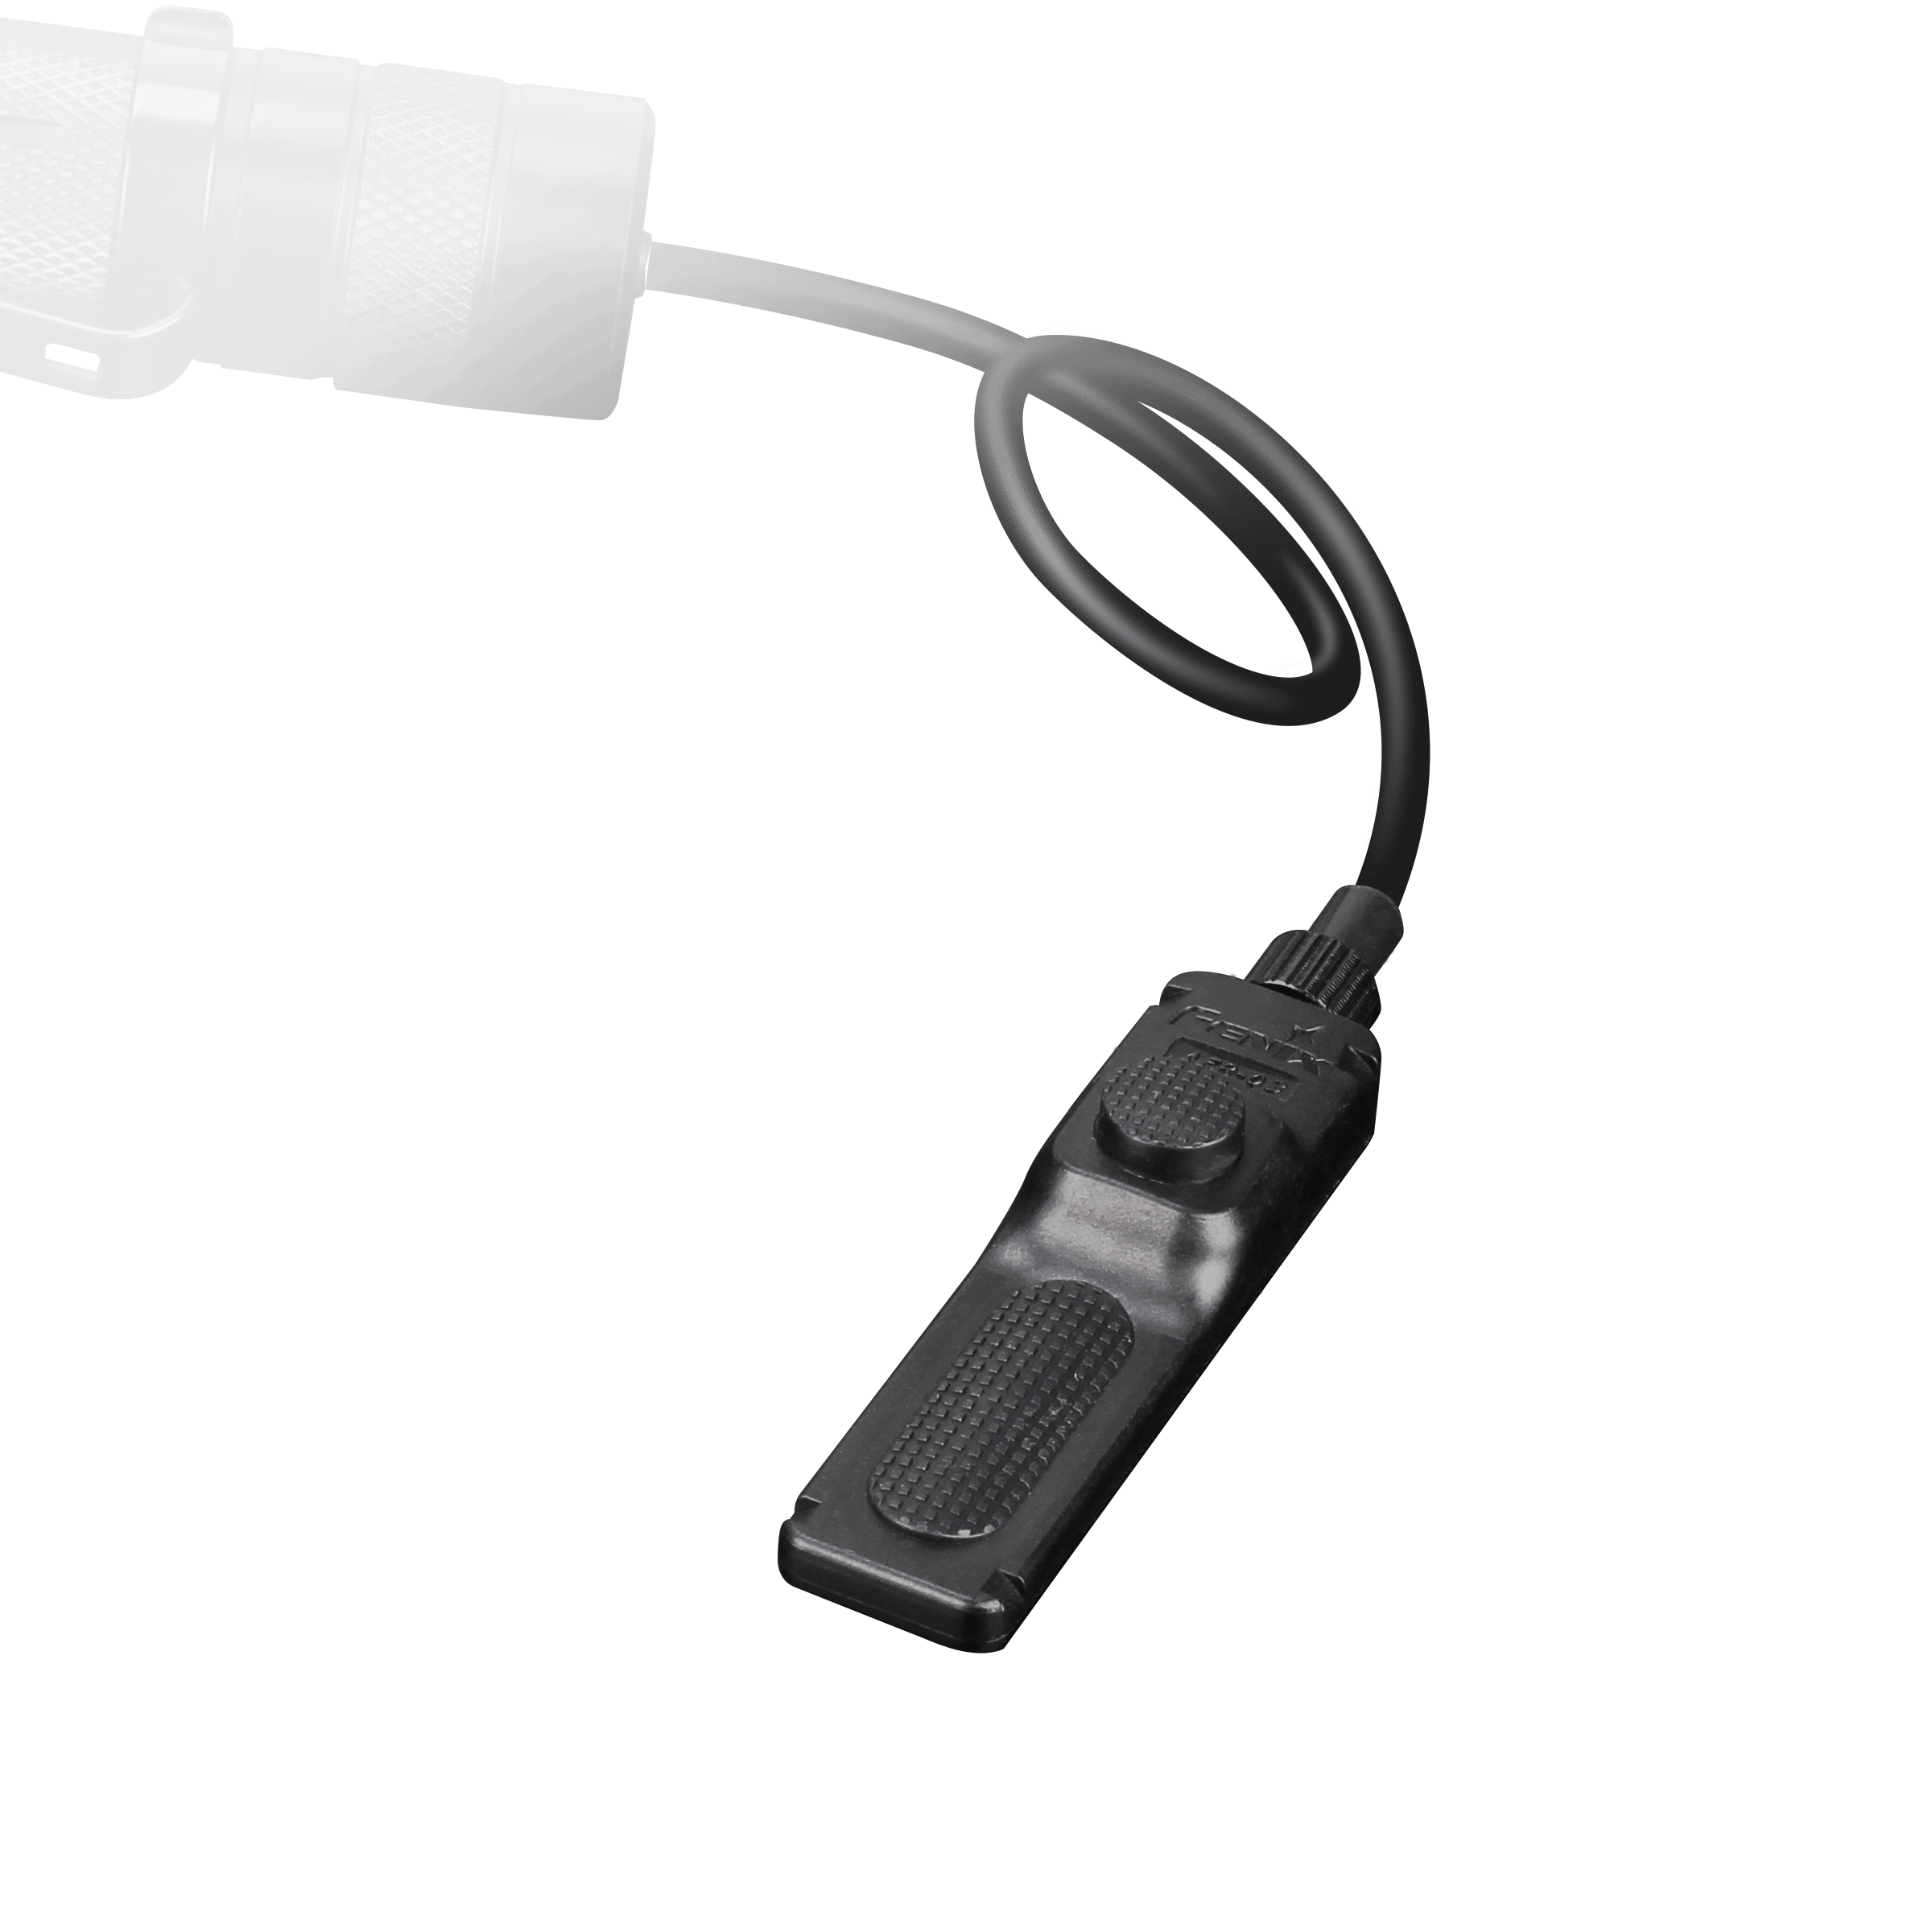 Fenix AER-06s Tactical Remote Switch - Fenix Lighting